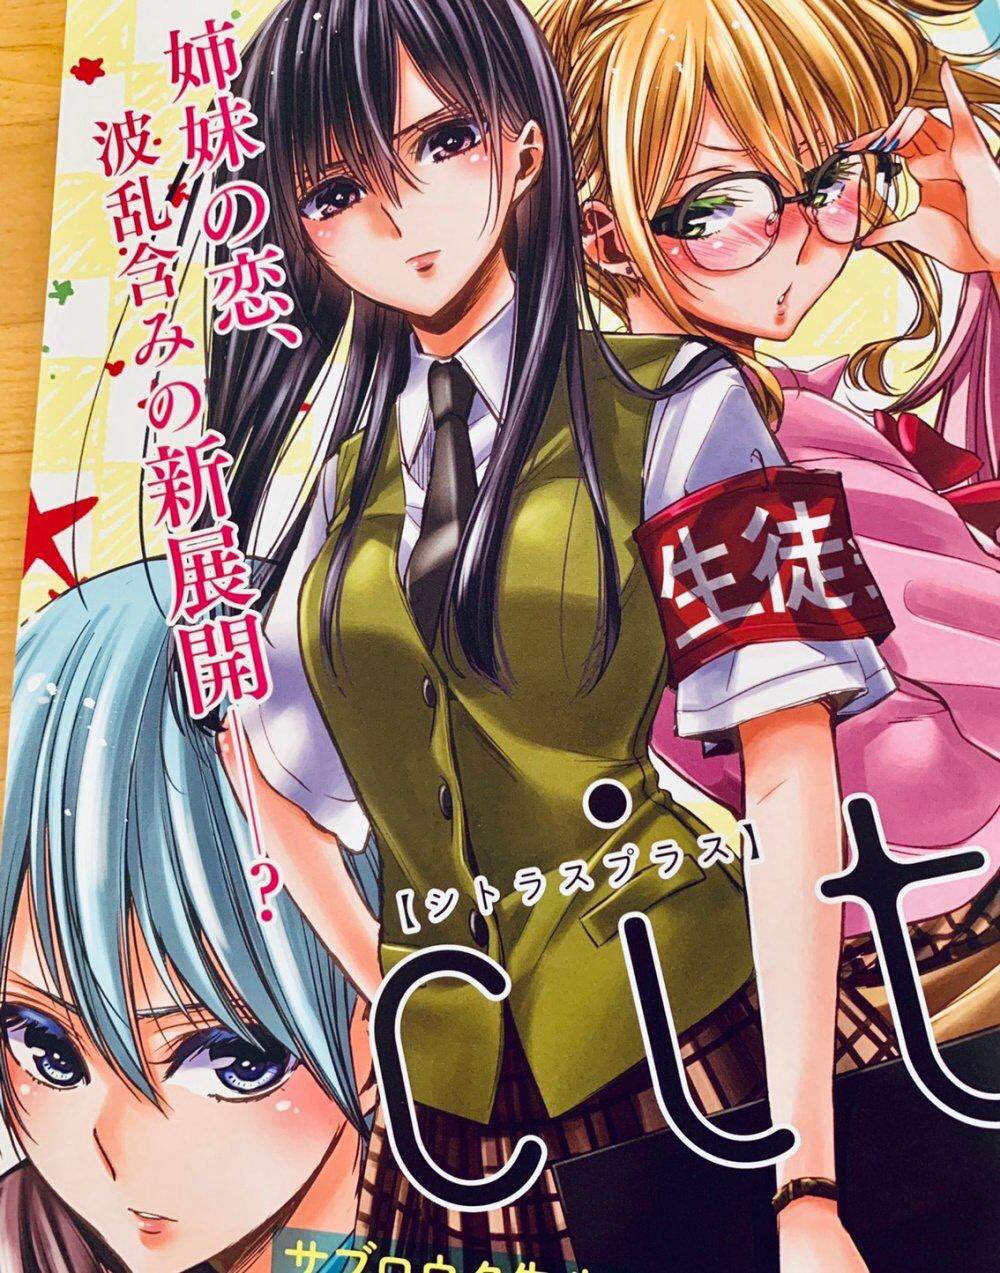 Citrus 116 Yuri Manga And Anime Amino